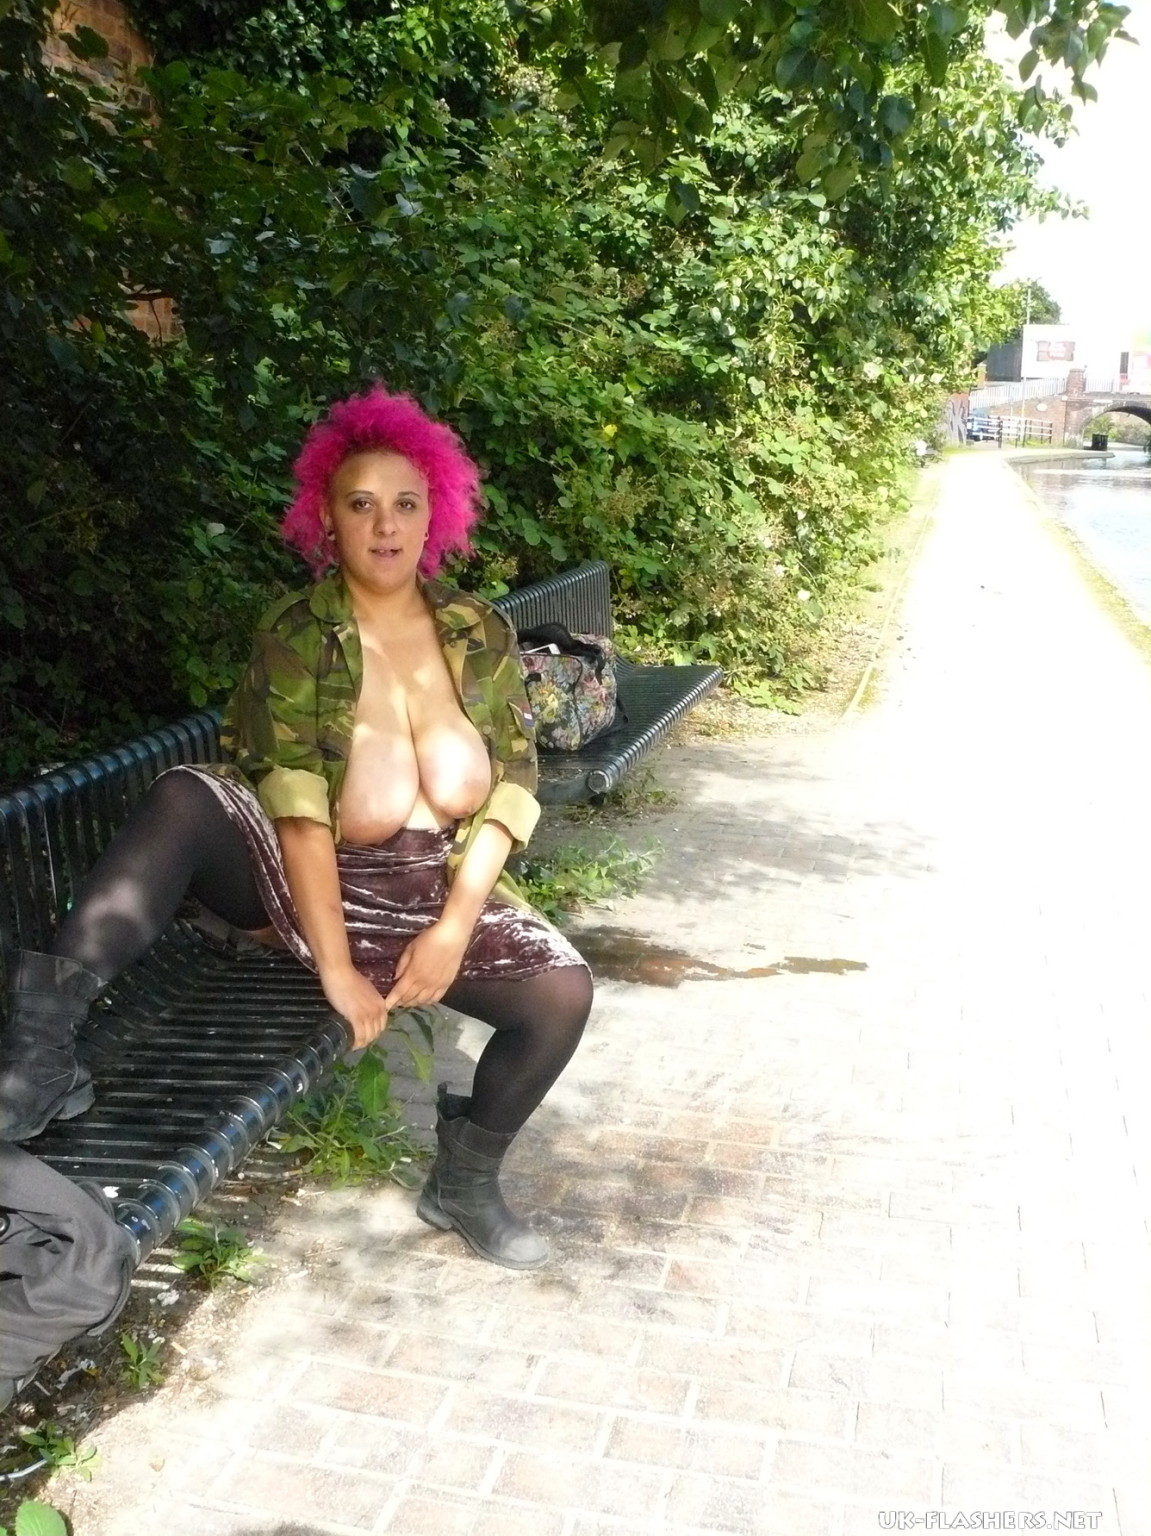 Busty flashing freak roxys voyeur y upskirt exposición al aire libre con pelo rosa
 #67166859